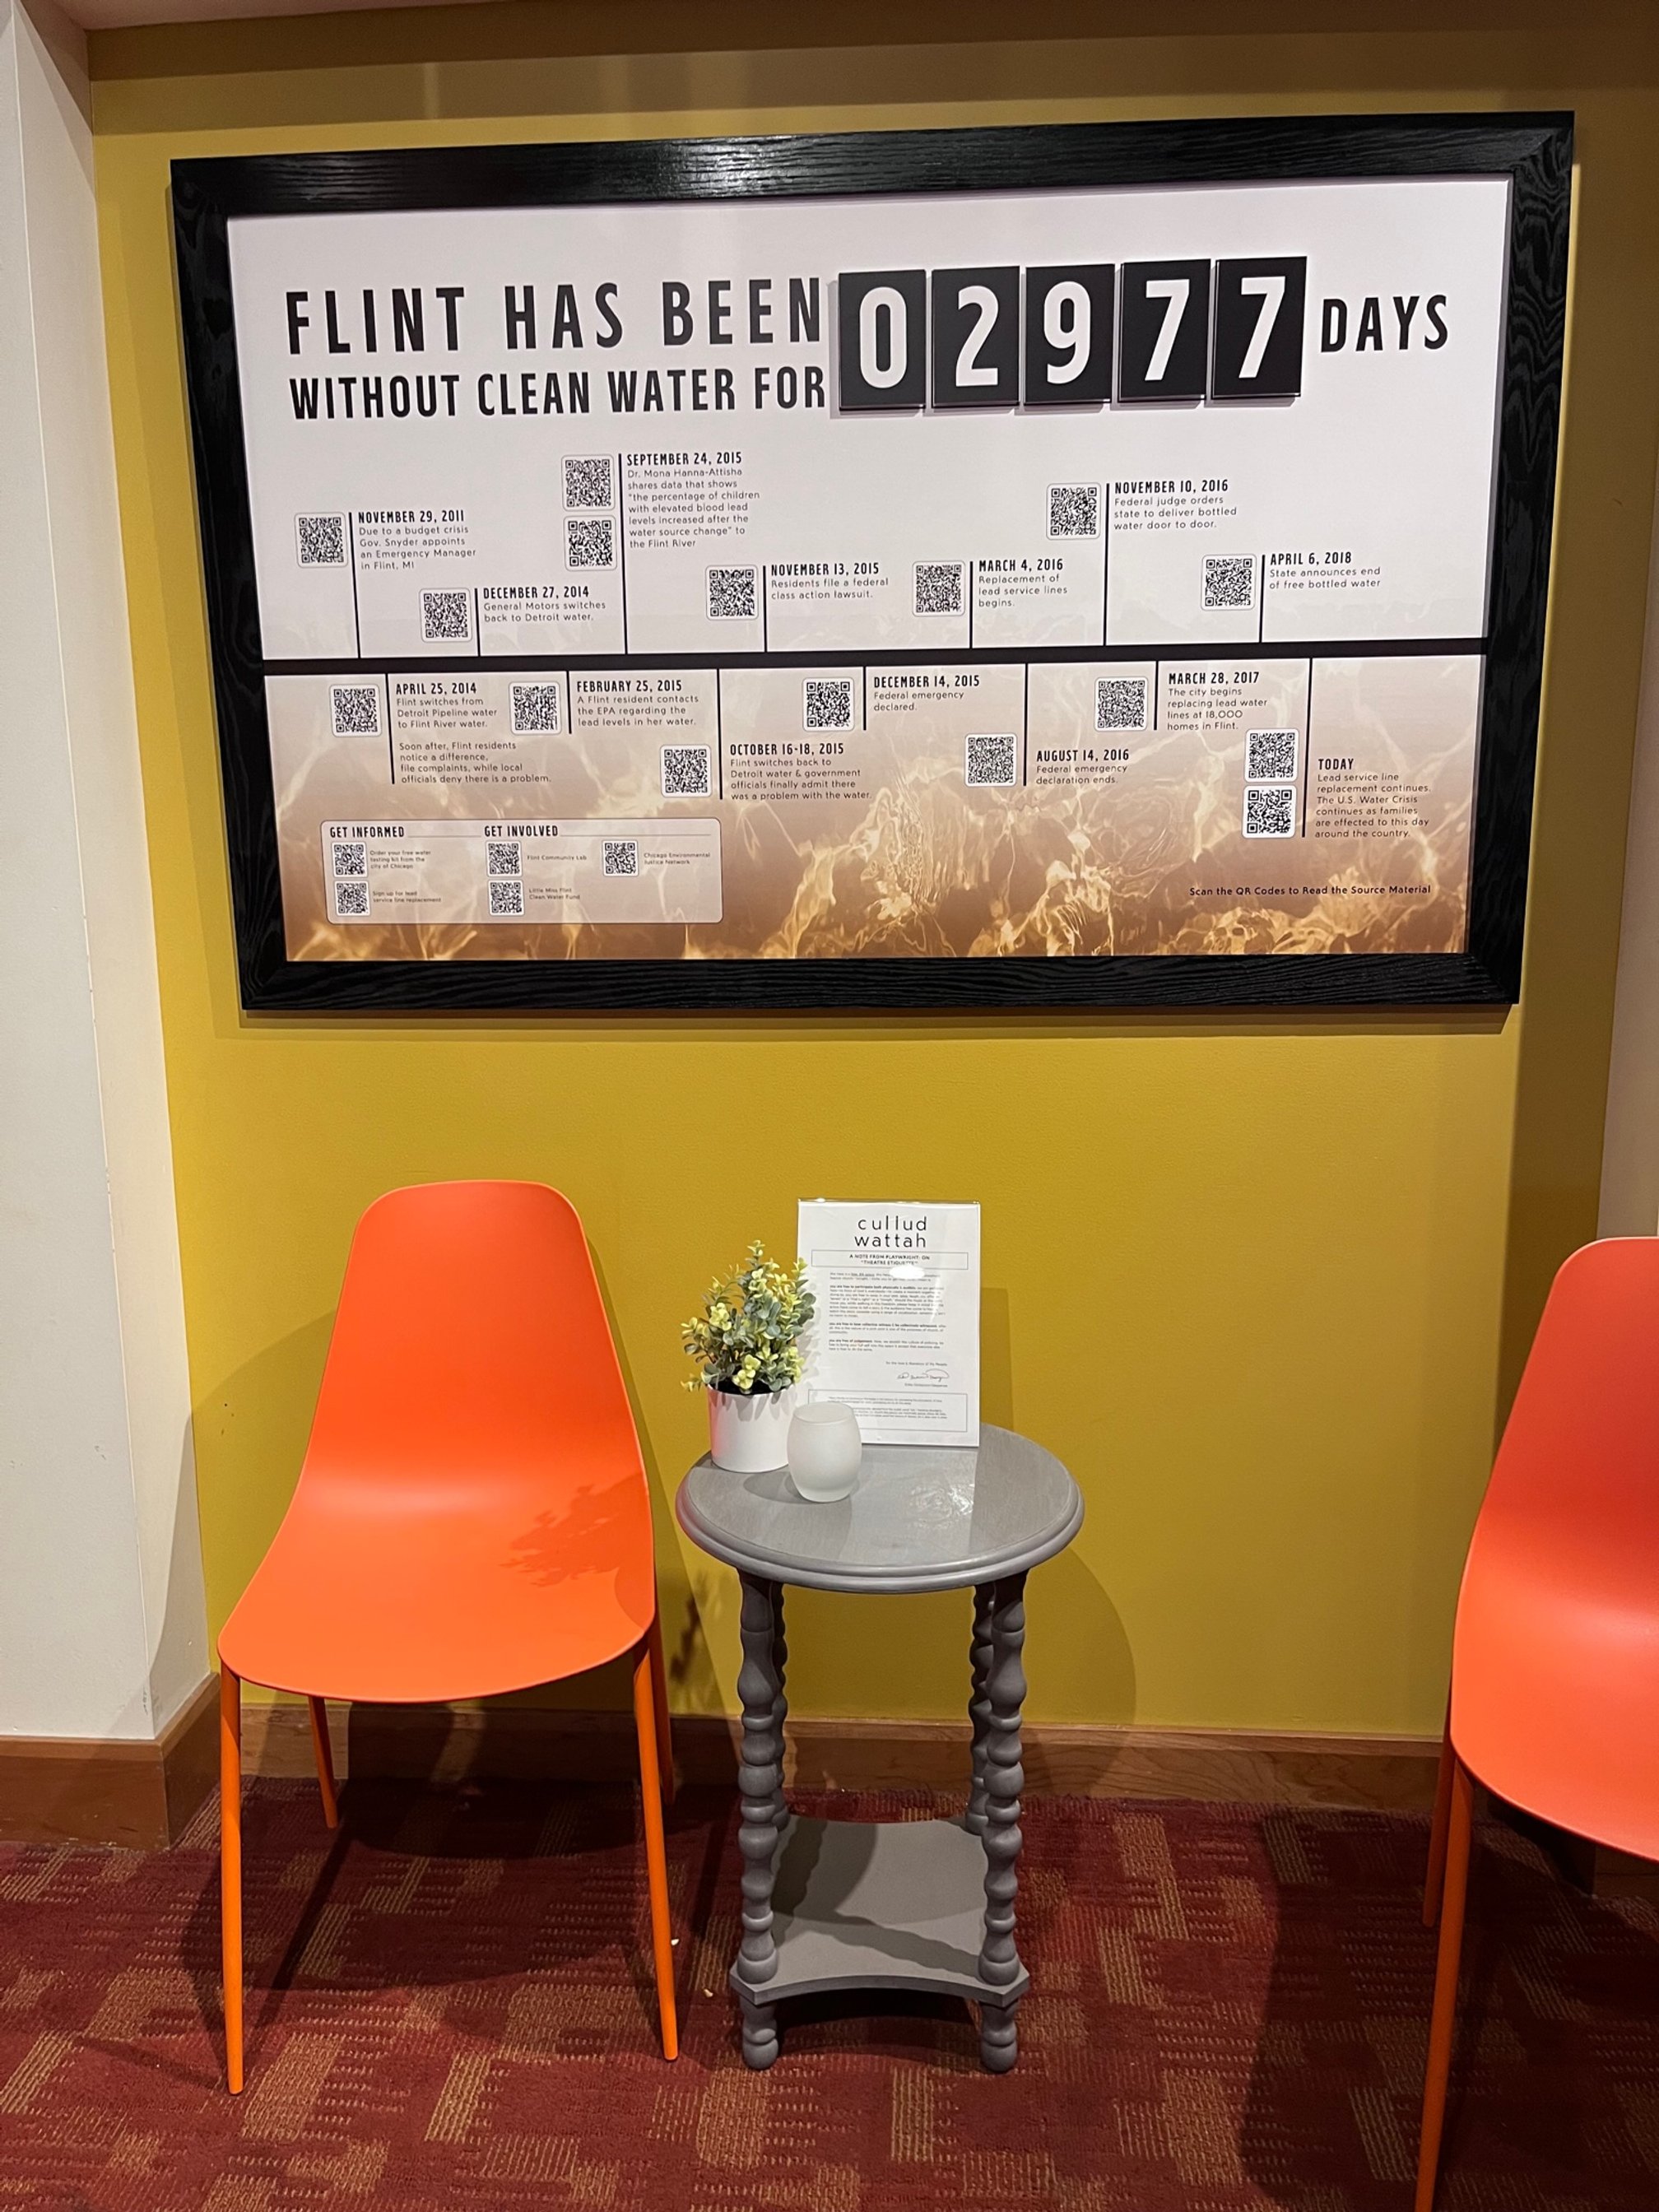 cullud wattah - Flint Crisis Counting Display